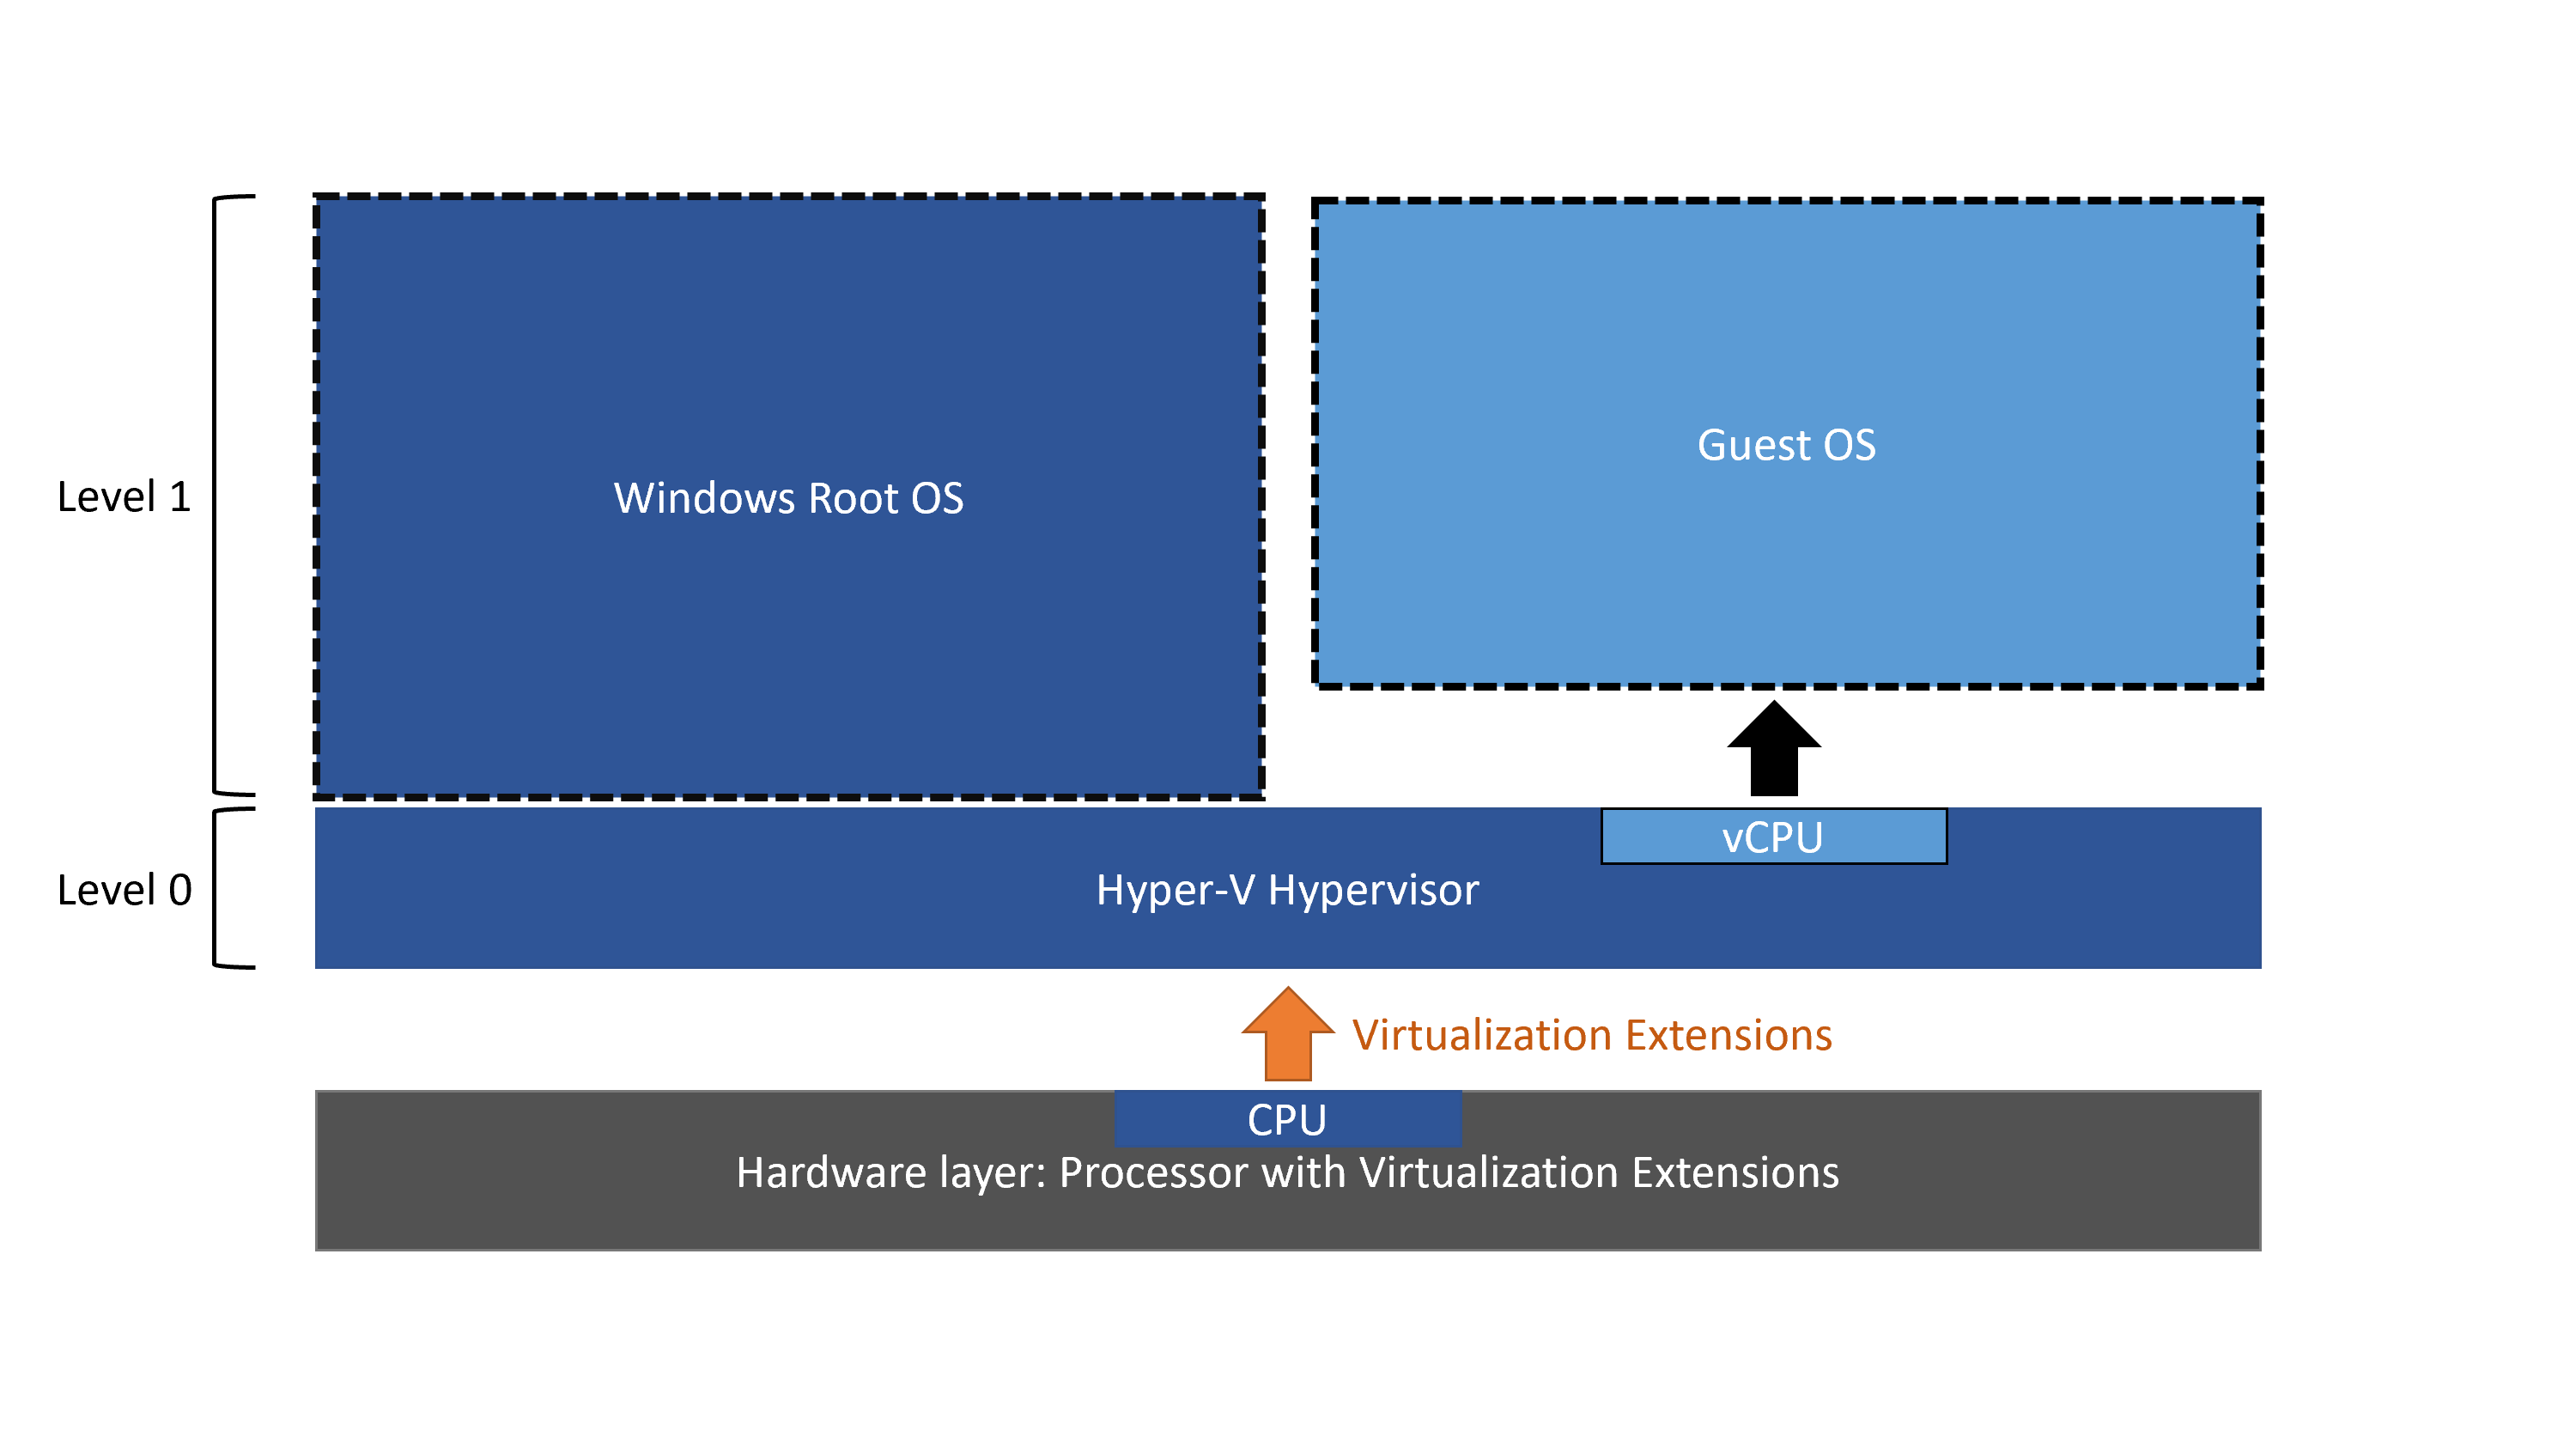 Does Hyper-V reduce performance?